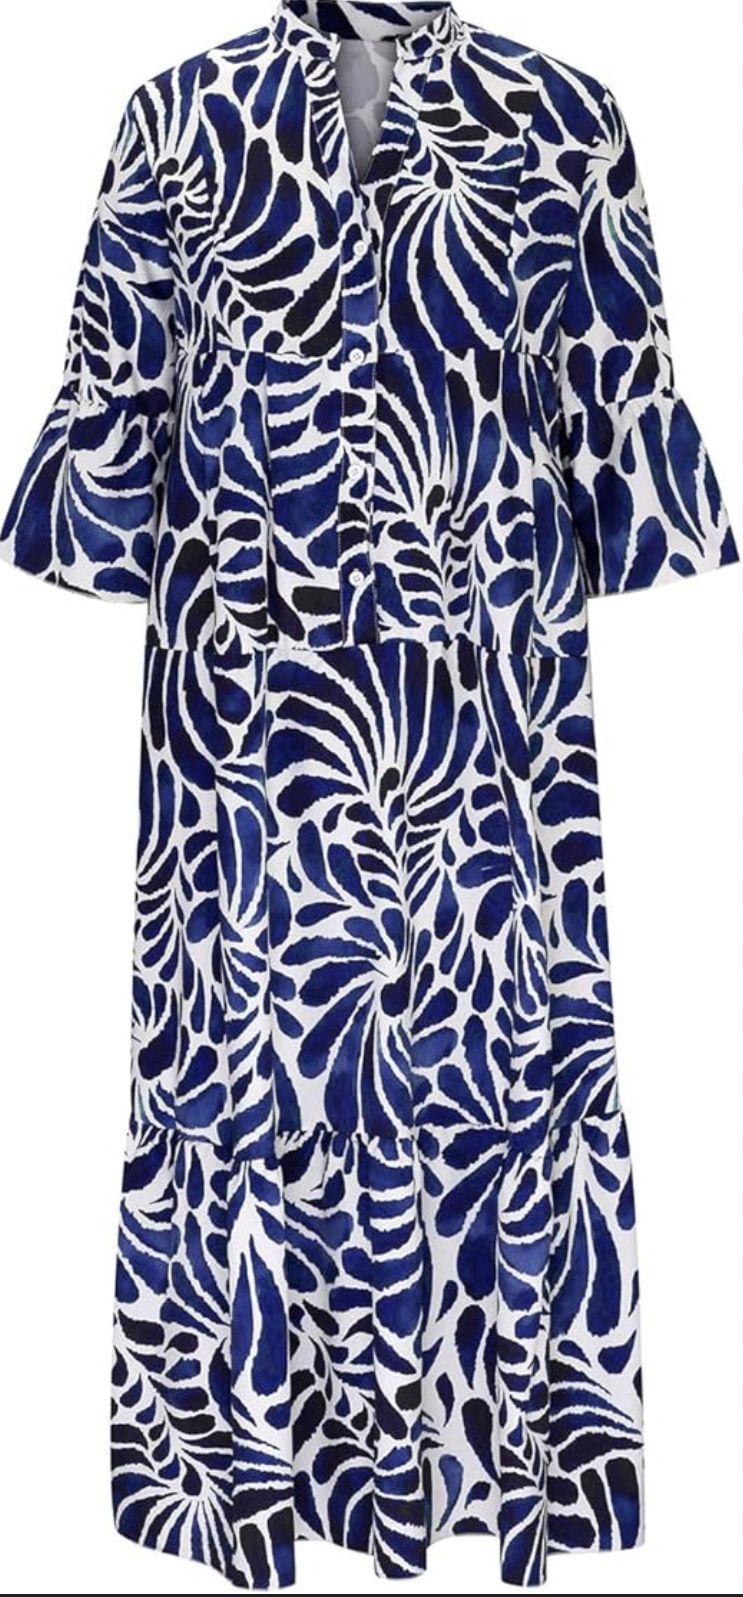 Printed Long Dress for Women Sexy V Neck Shirt Dresses L B-81926 - TUZZUT Qatar Online Shopping